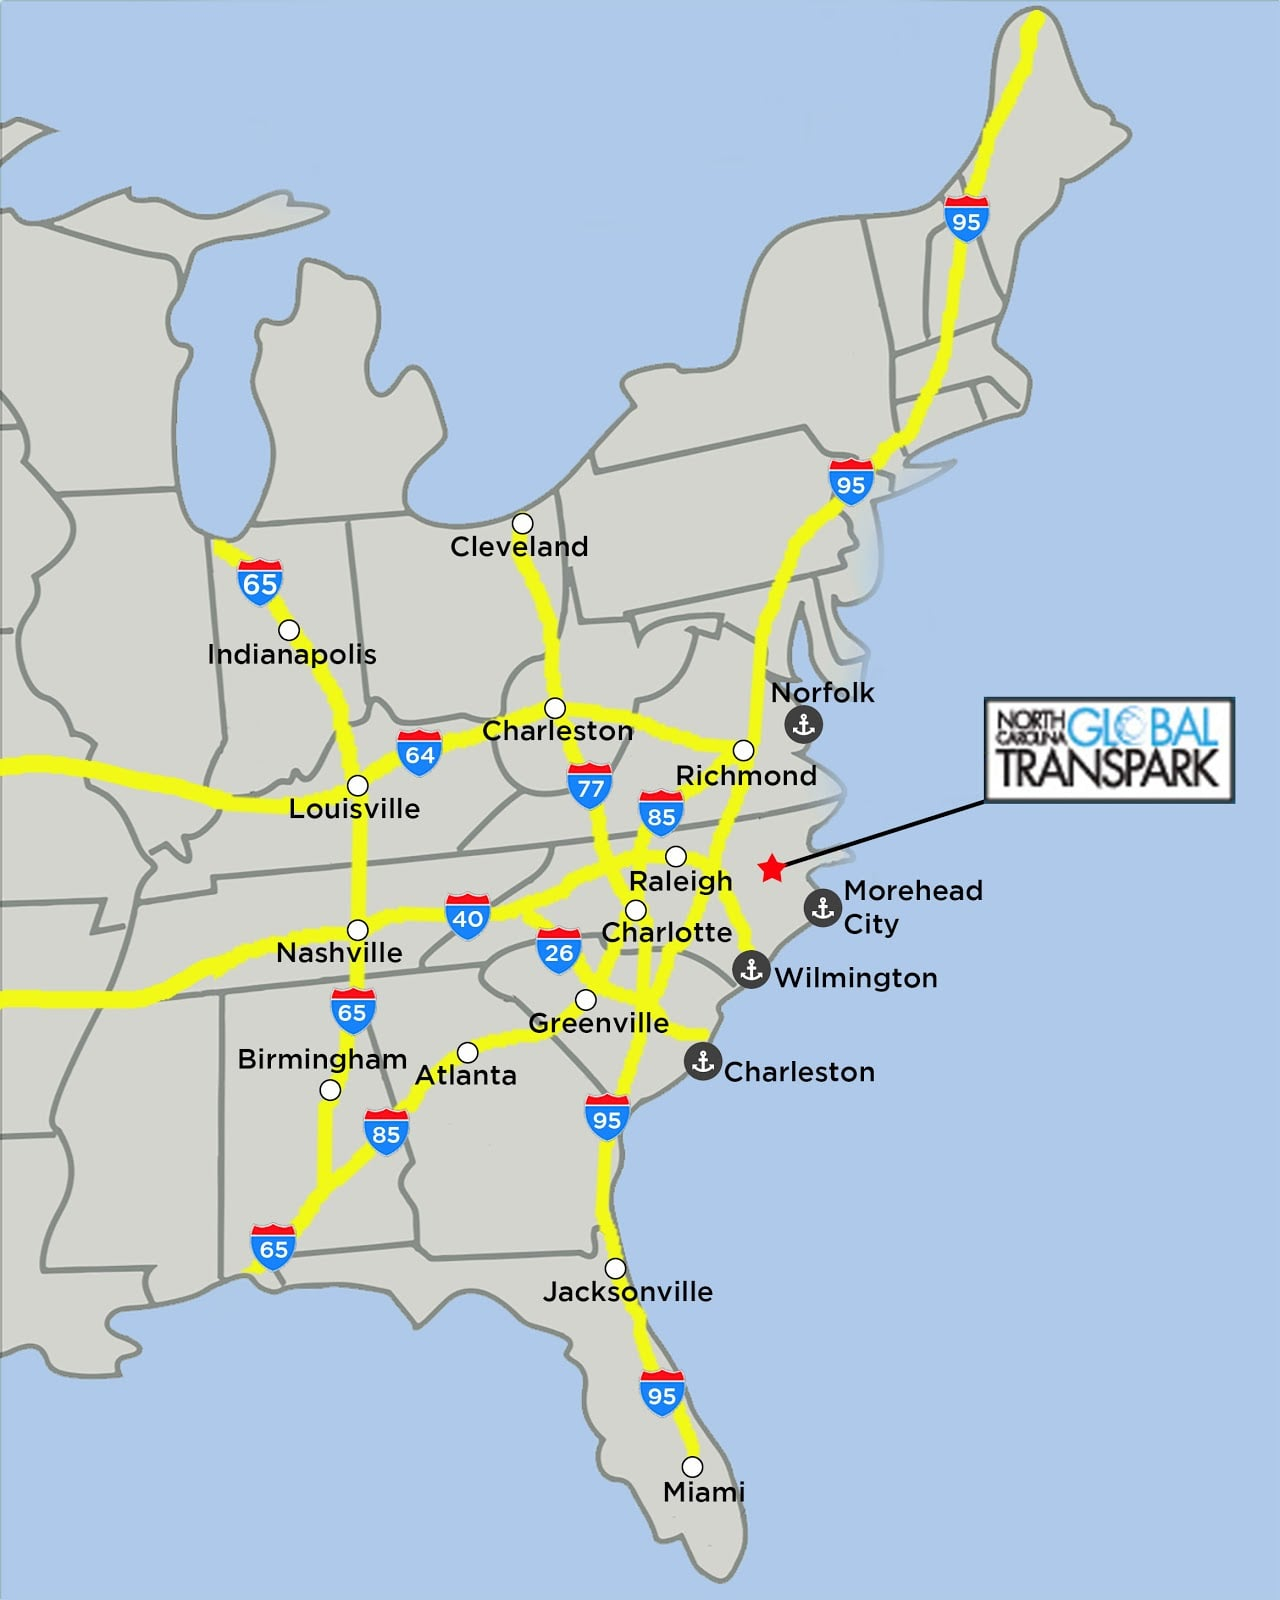 North Carolina Global TransPark Maps